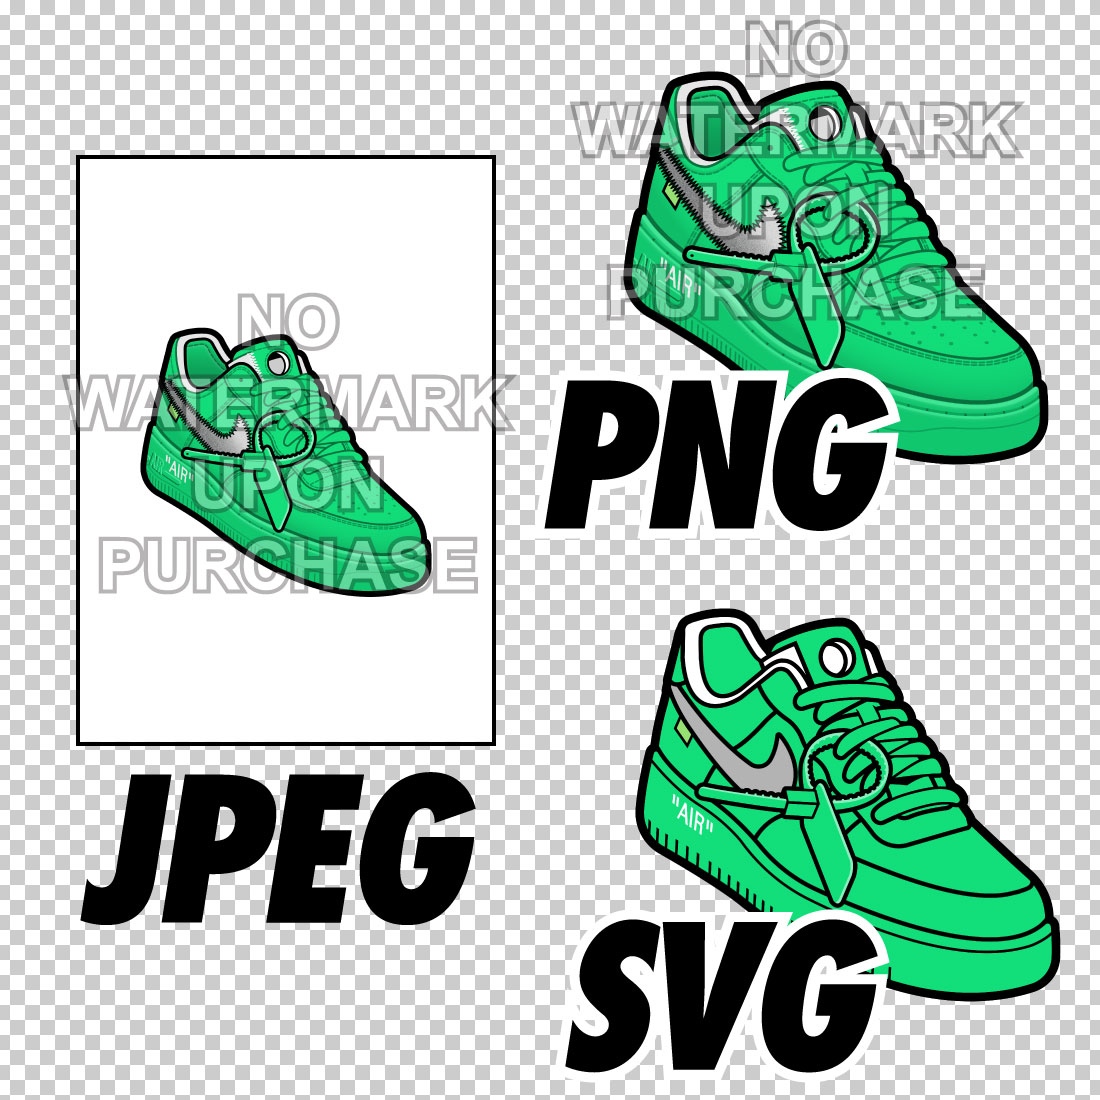 Air Force 1 Off White Green Left & Right shoe bundle JPEG PNG SVG digital download preview image.